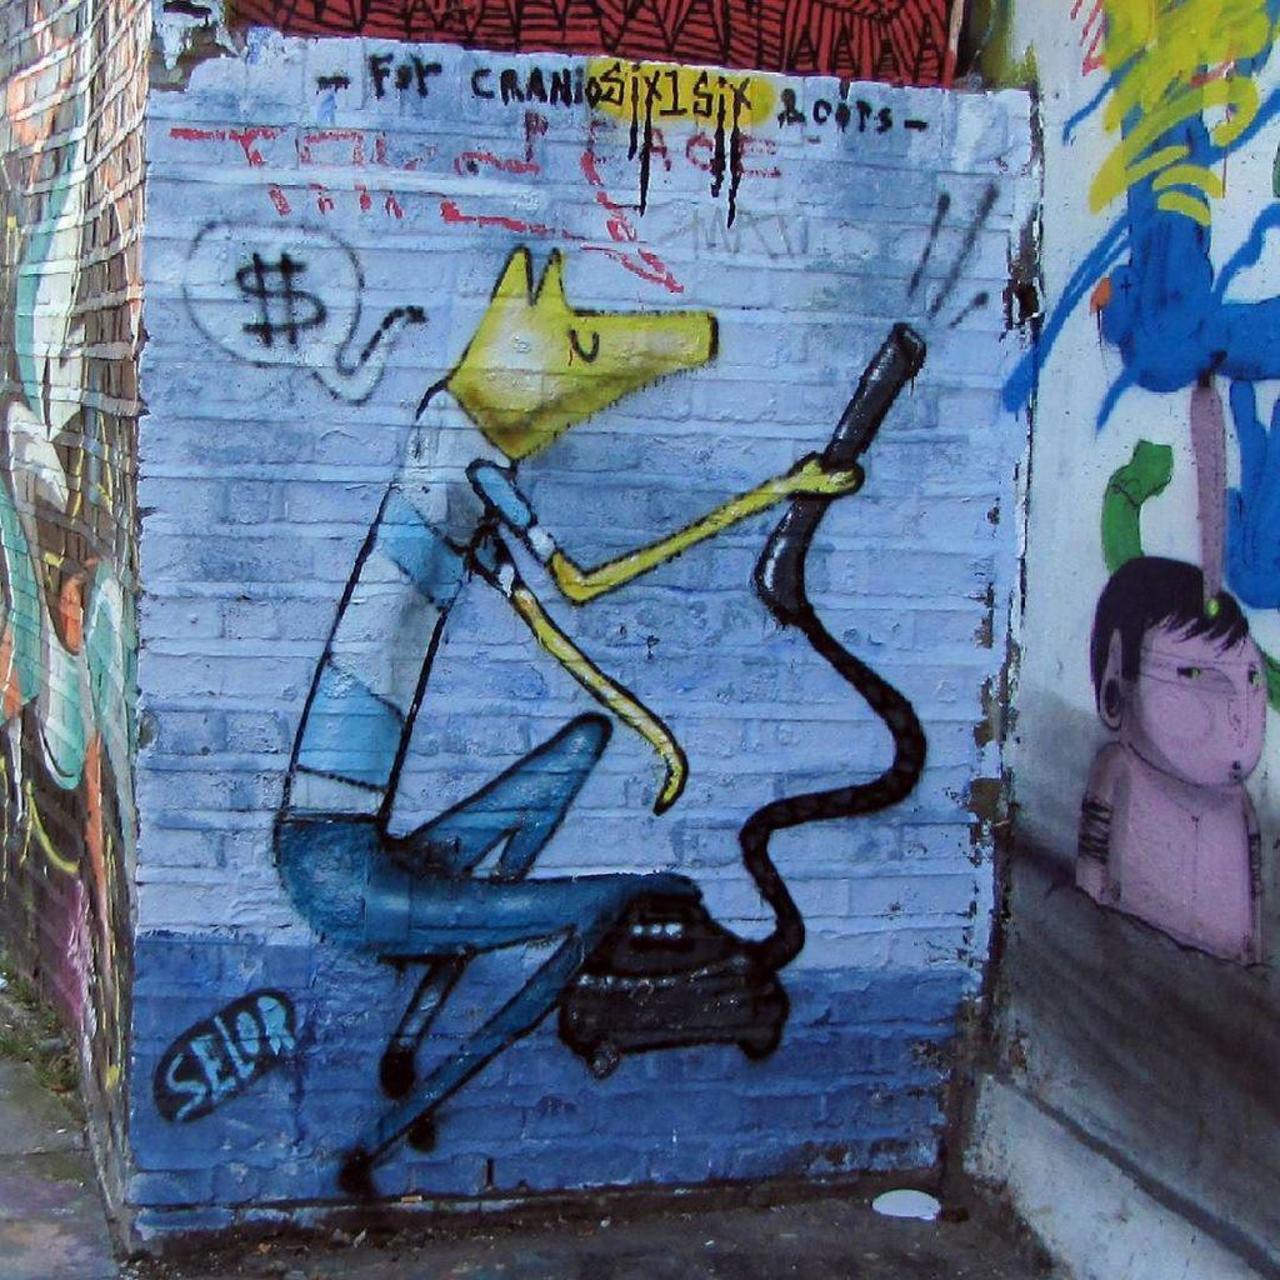 StArtEverywhere: #streetart #graffiti #london #shoreditch #bricklane #urbanart #spraycanart #spraycan #urban #stre… http://t.co/0ObHSipXix